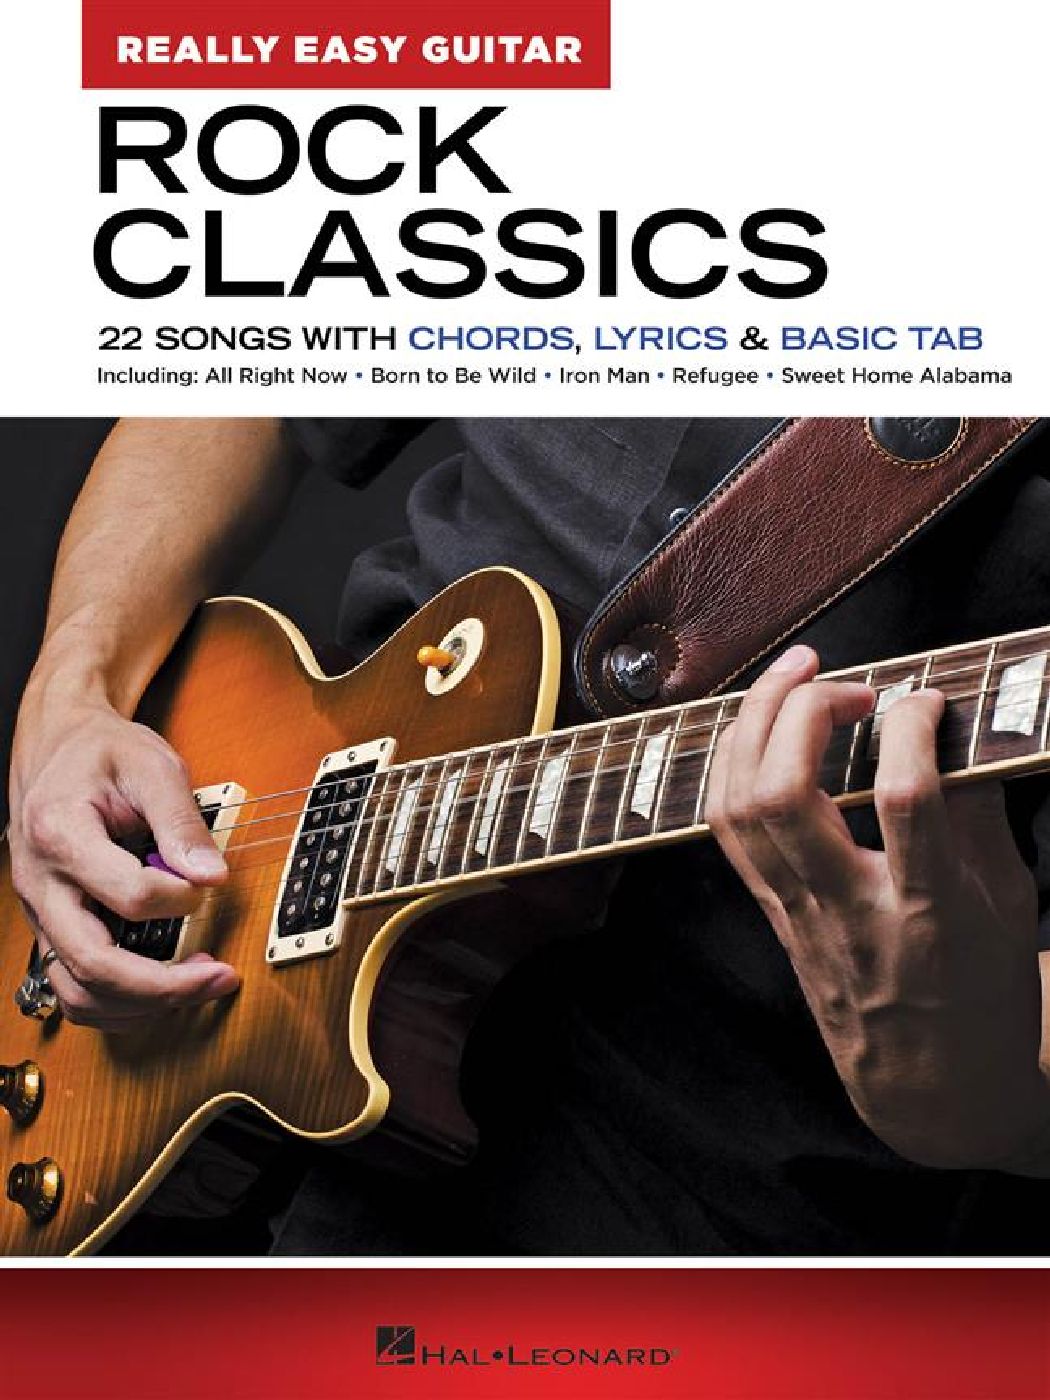 HAL LEONARD ROCK CLASSICS - REALLY EASY GUITAR SERIES - GUITARE FACILE